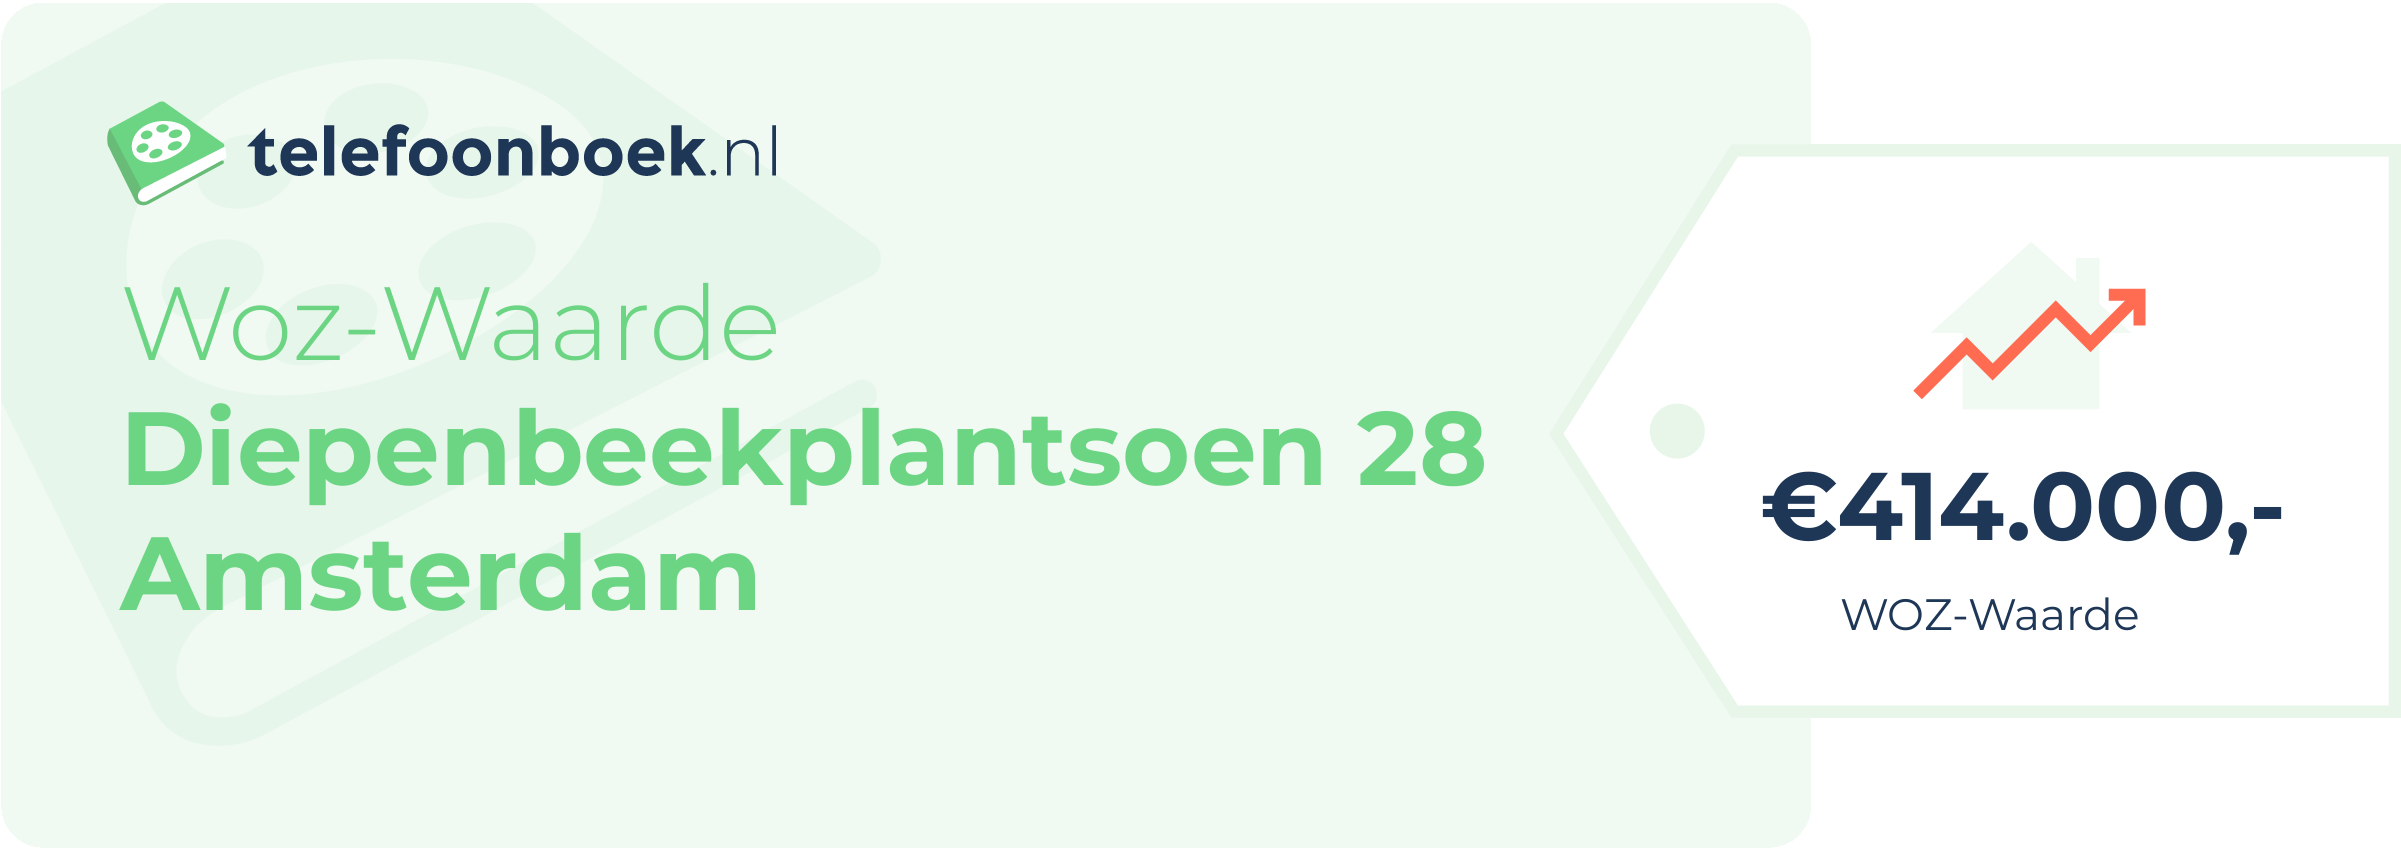 WOZ-waarde Diepenbeekplantsoen 28 Amsterdam